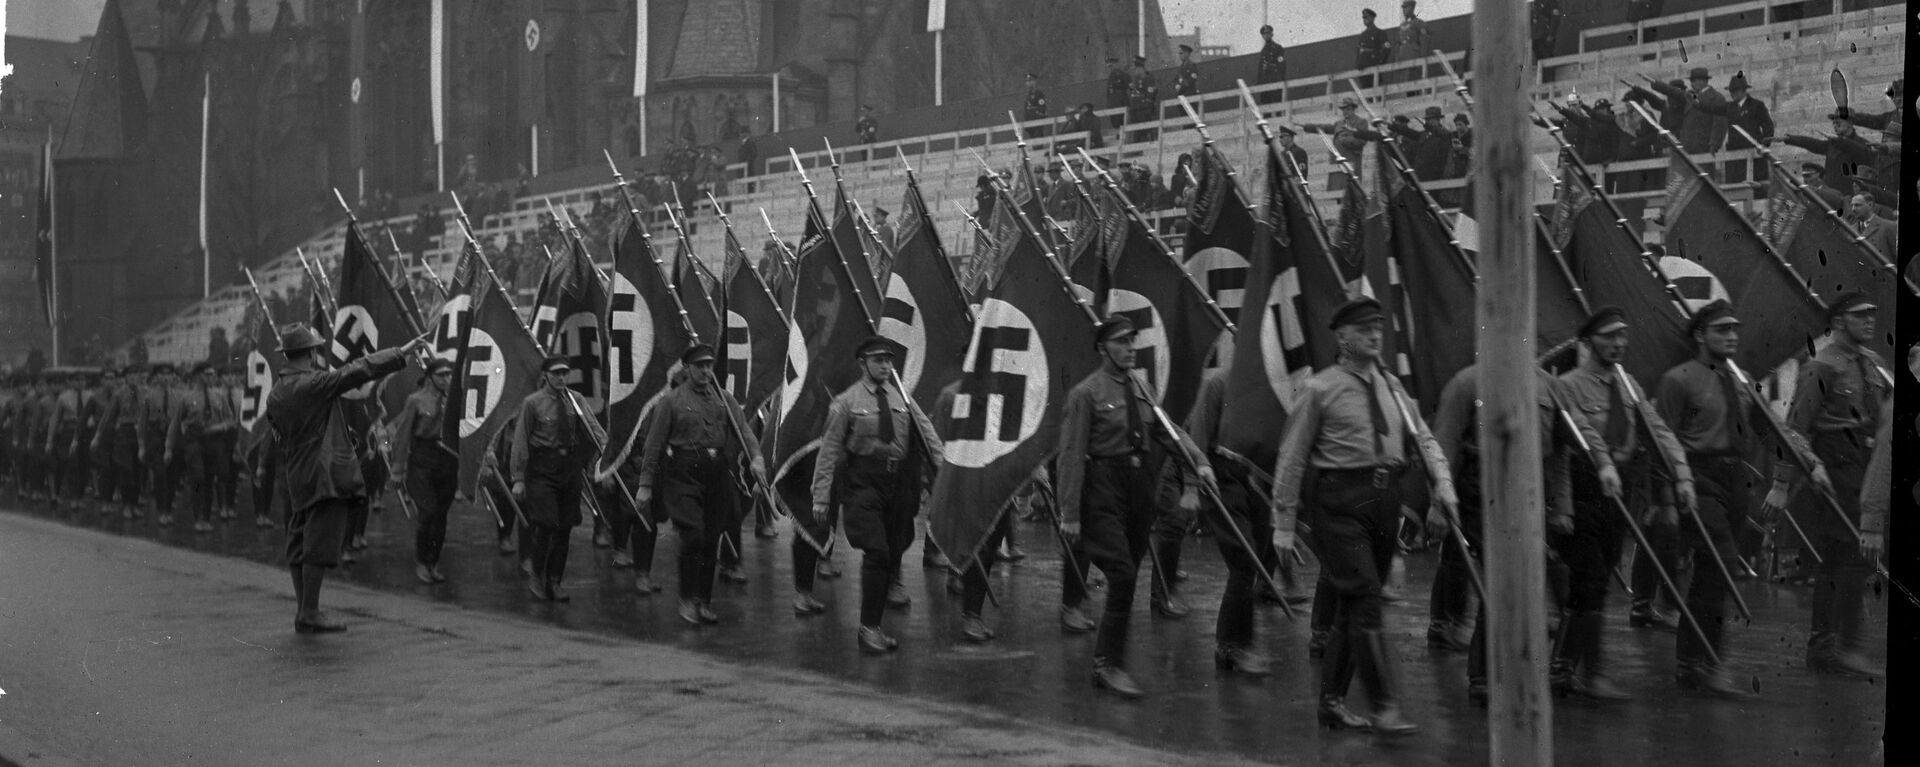 Un desfile militar nazi en Alemania en 1939 - Sputnik Mundo, 1920, 12.04.2021